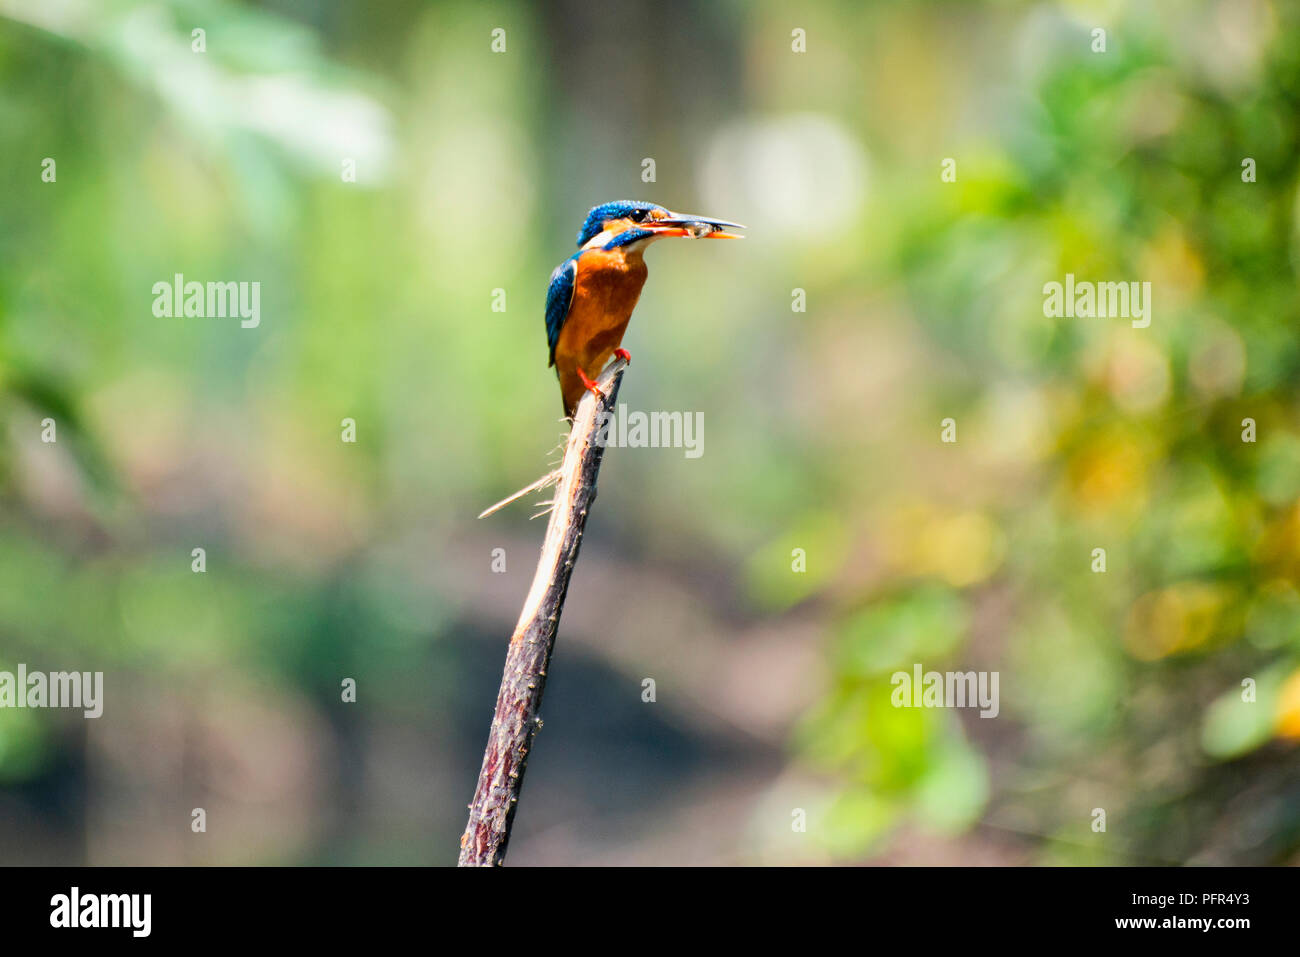 Sri Lanka, provincia occidentale, Negombo, Muthurajawela marsh, kingfisher appollaiate sul gambo di pianta Foto Stock